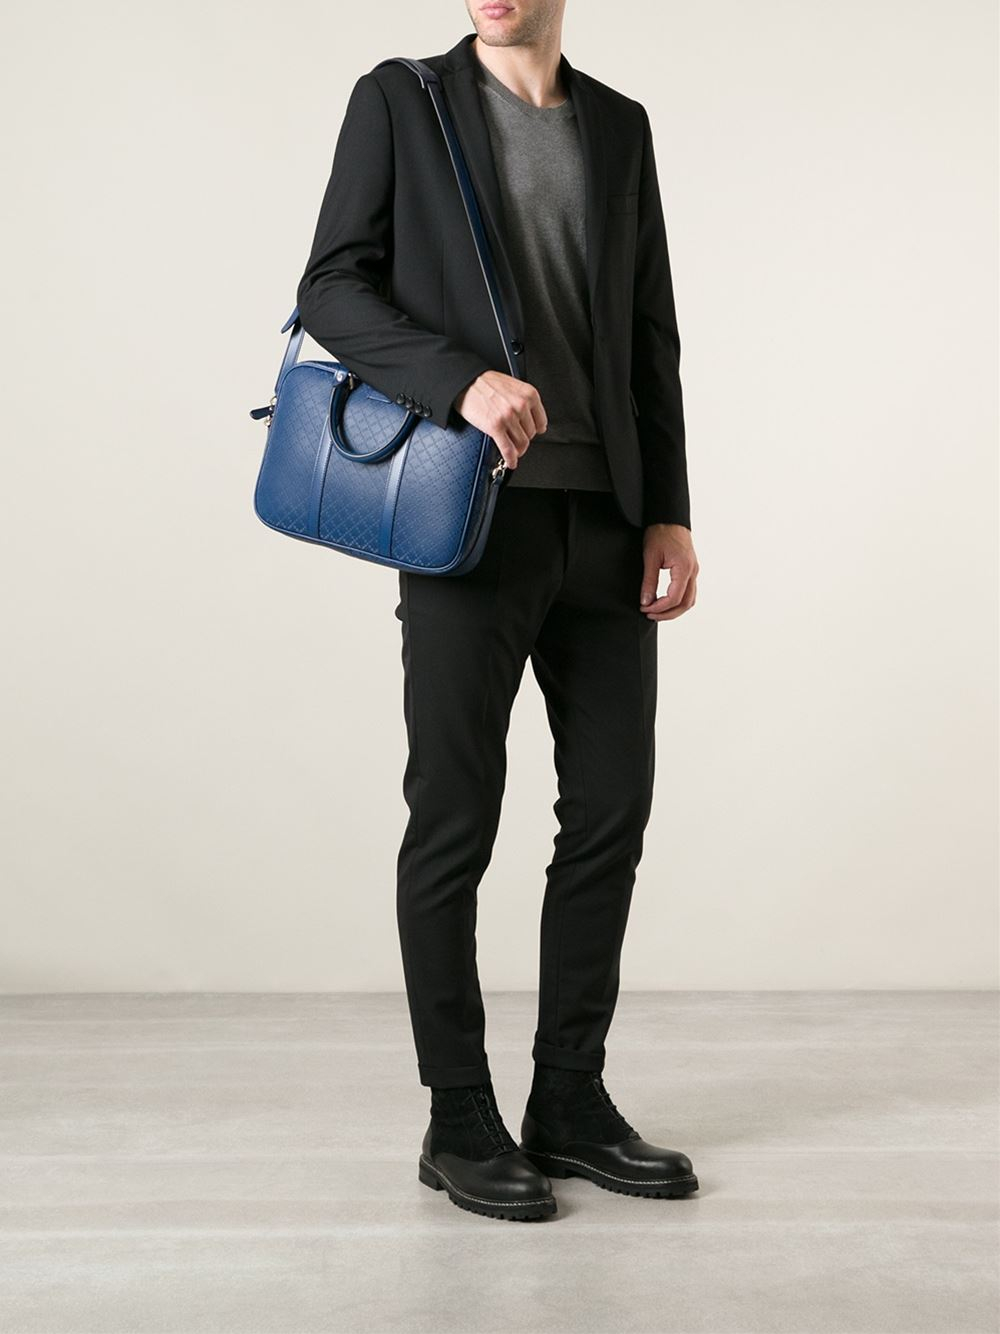 Lyst - Gucci Diamond Laptop Bag in Blue for Men